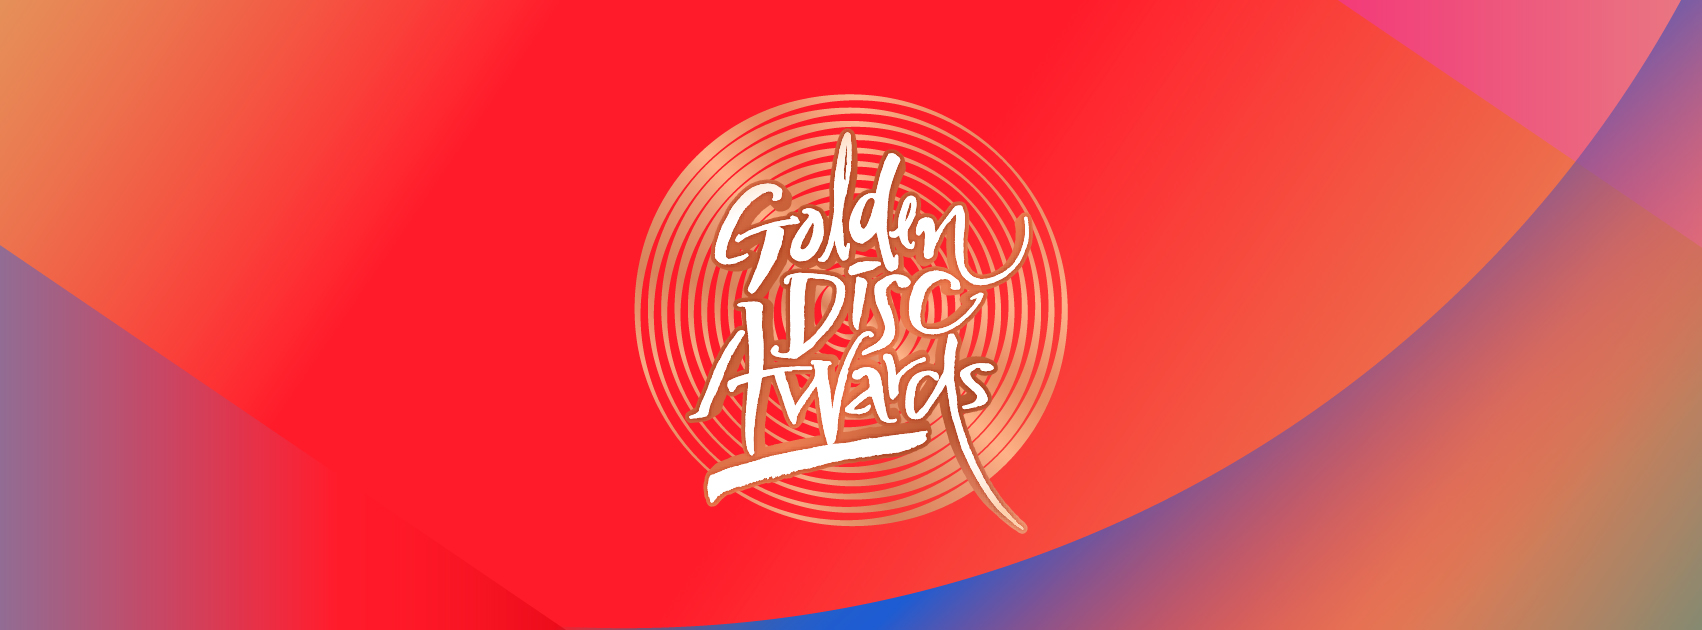 BTS, EXO, TWICE, and Red Velvet nominated Golden Disc Awards 2019